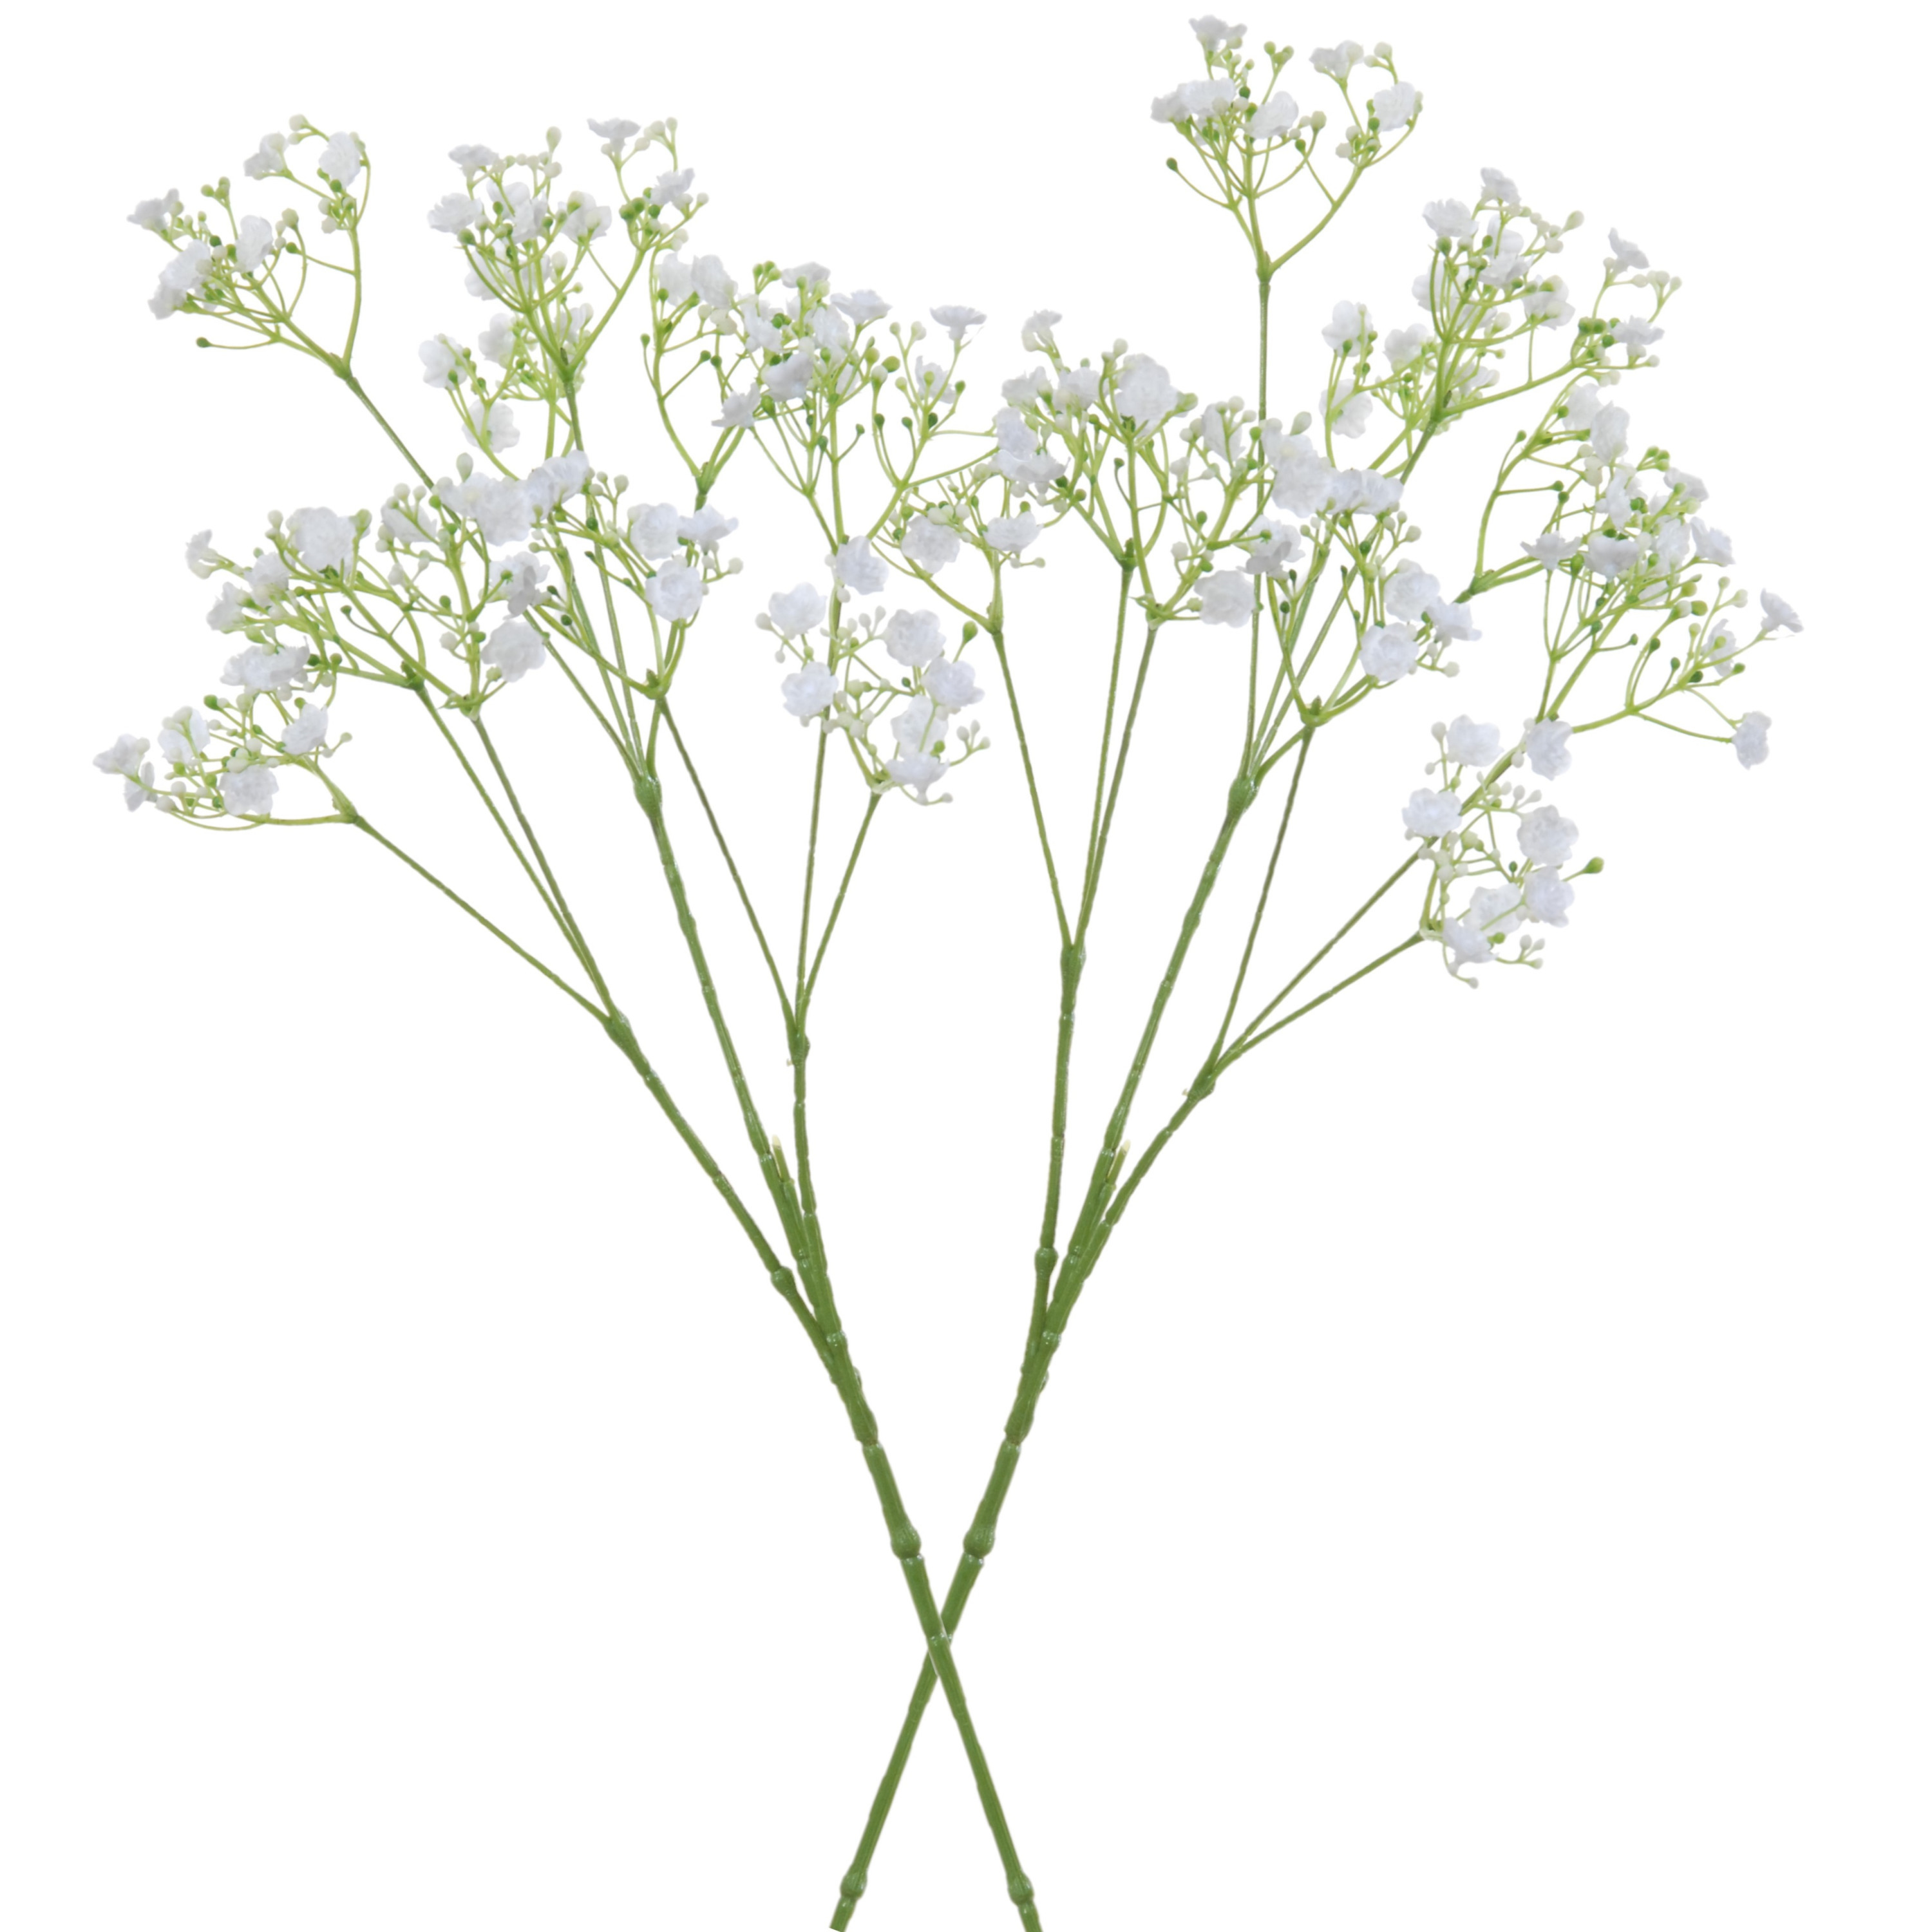 4x stuks kunstbloemen Gipskruid/Gypsophila takken wit 70 cm -